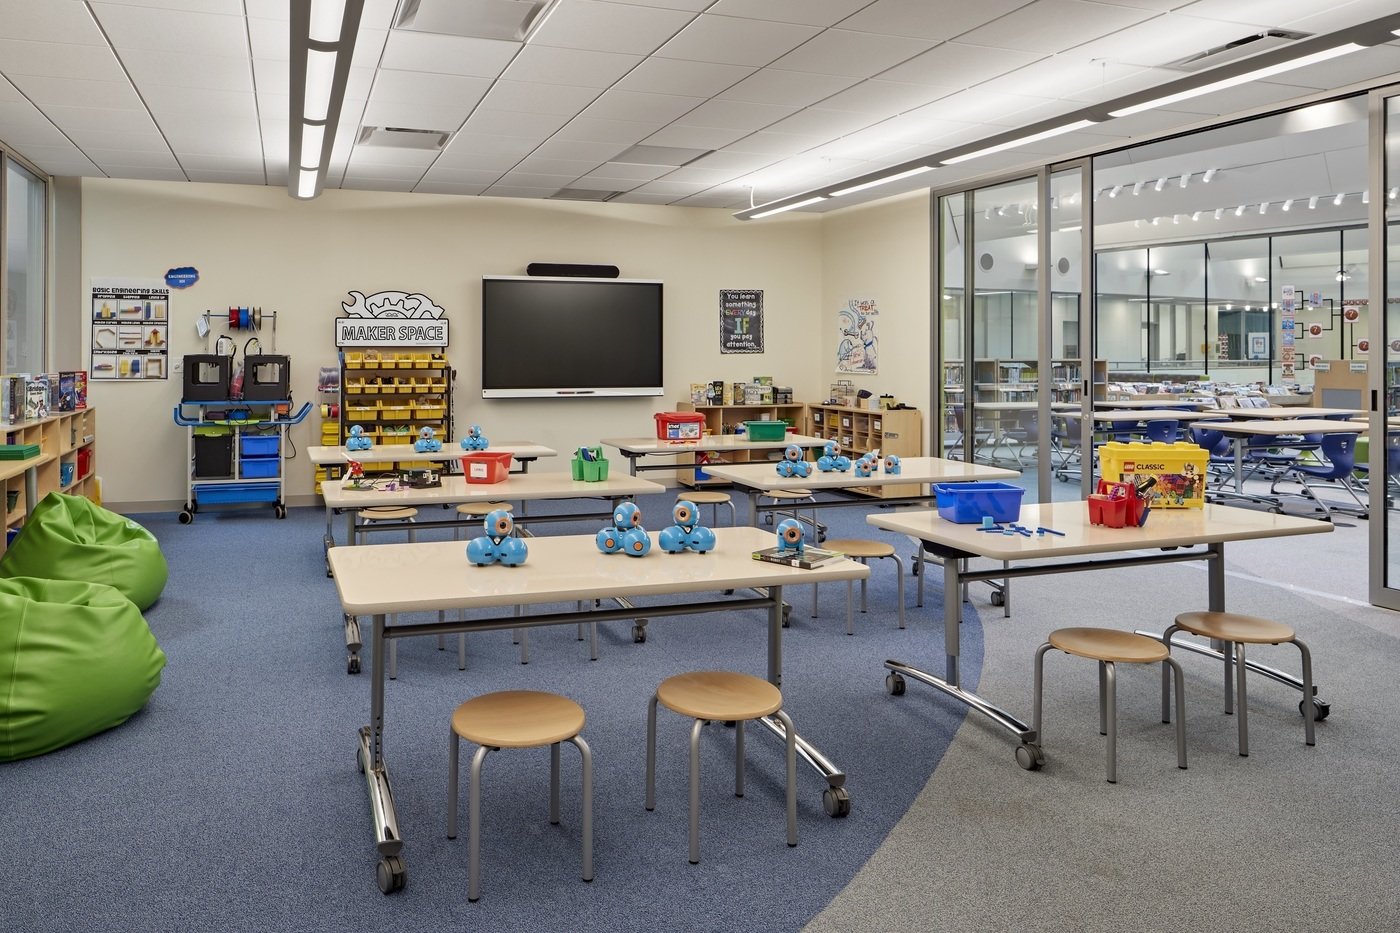 15 tskp greenwhich new lebanon elementary school flexible interior classroom 1400 0x0x2811x1874 q85